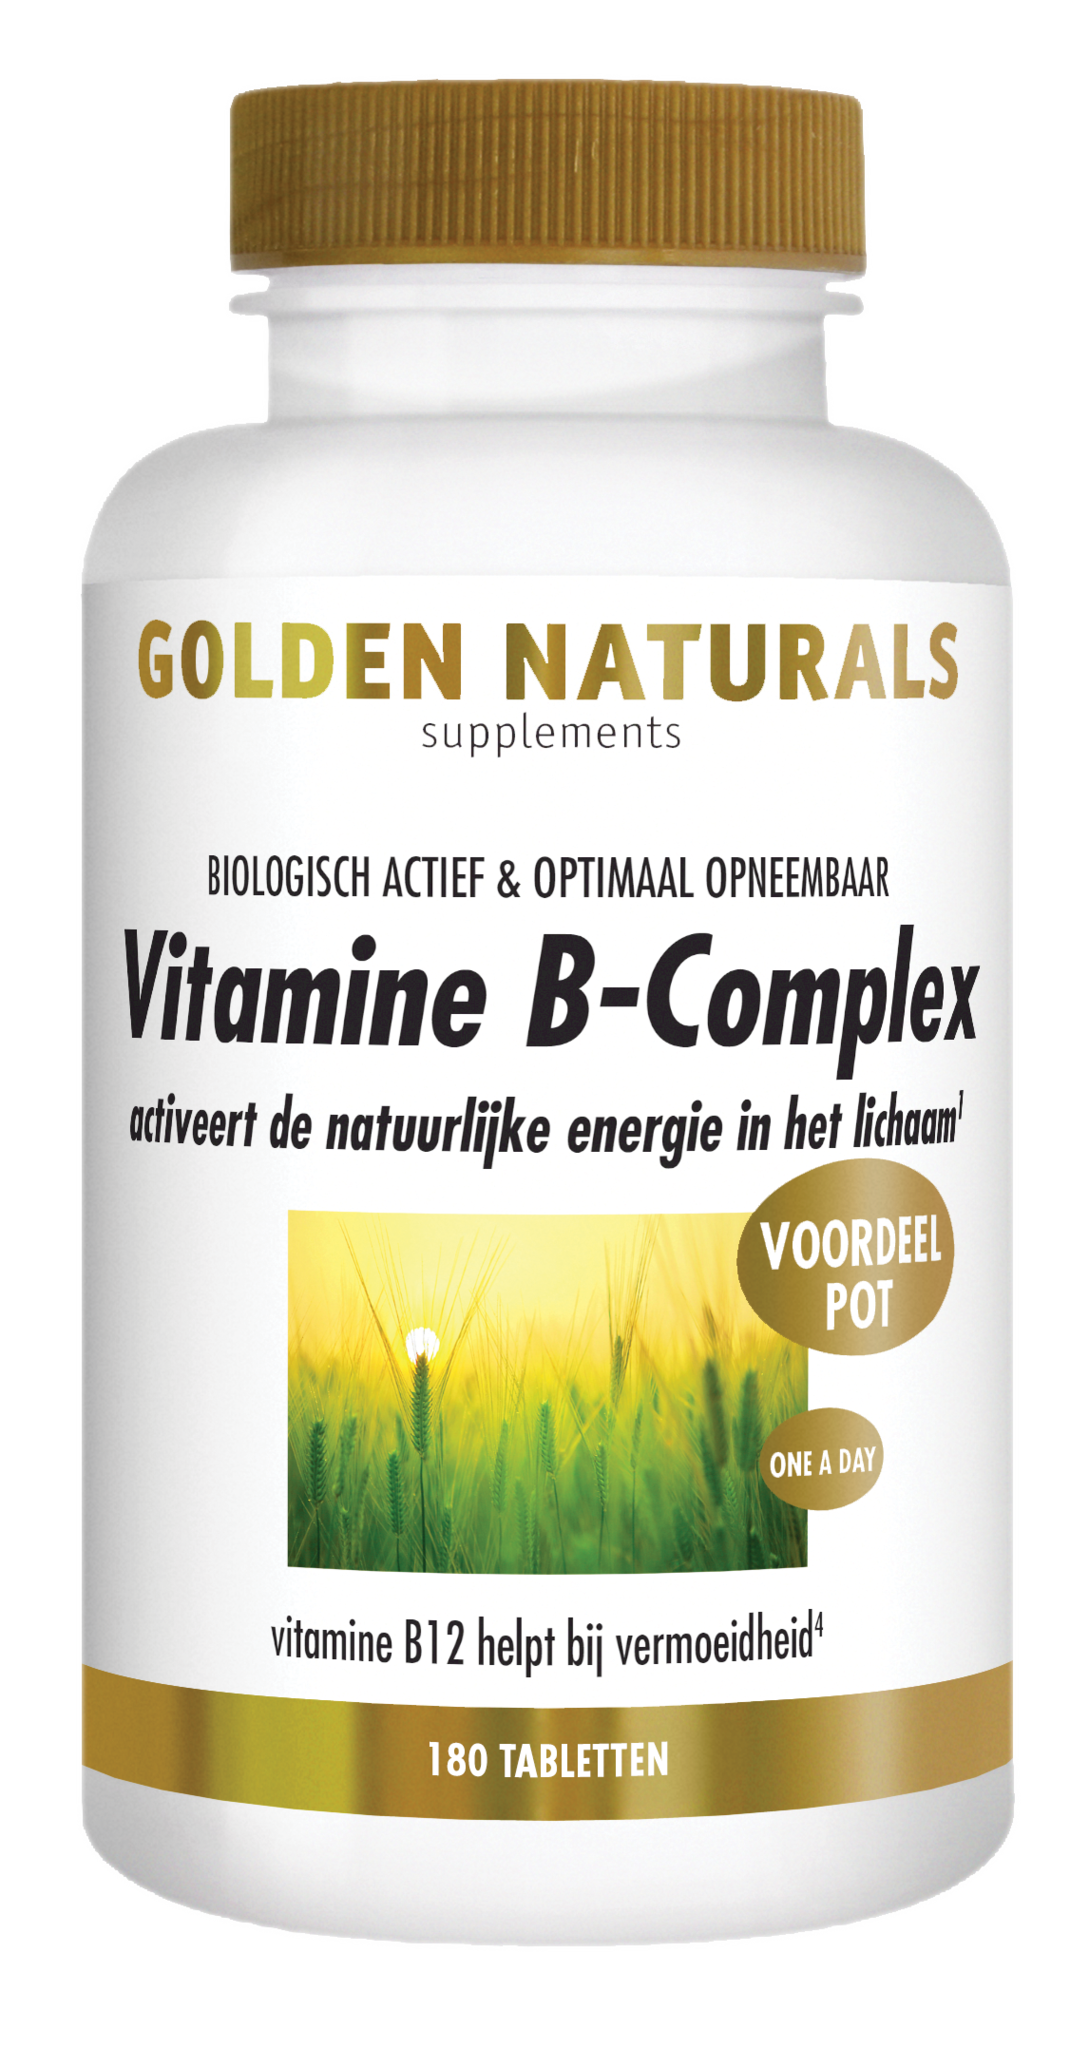 Golden Naturals Golden Naturals Vitamin B-Komplex (180 Tabletten)